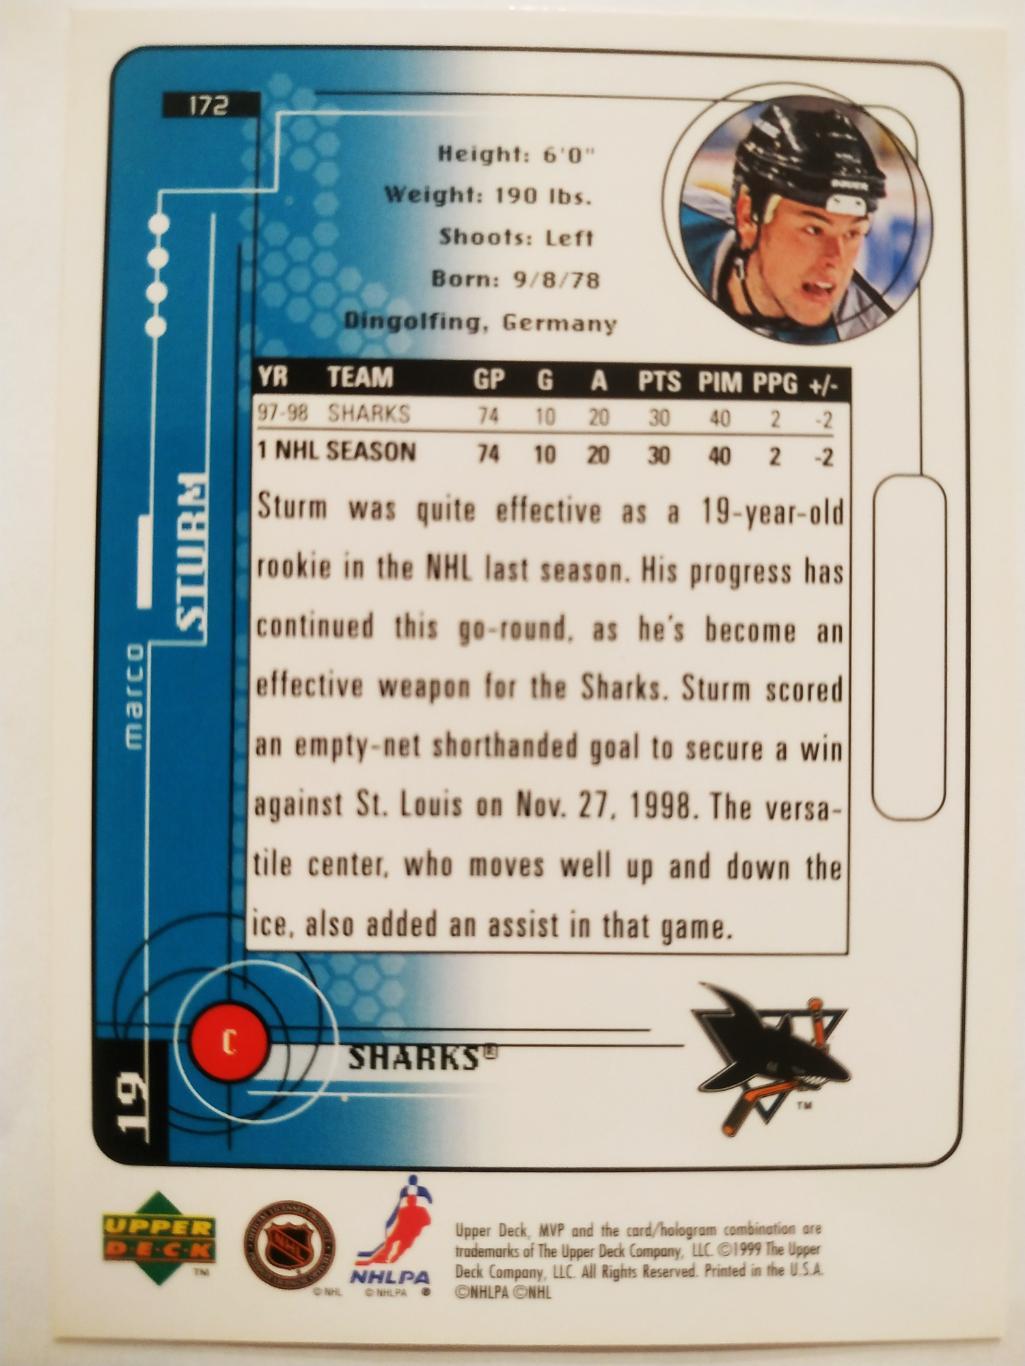 ХОККЕЙ КАРТОЧКА НХЛ UPPER DECK MVP 1998-1999 NHL MARCO STURM SHARKS #172 1